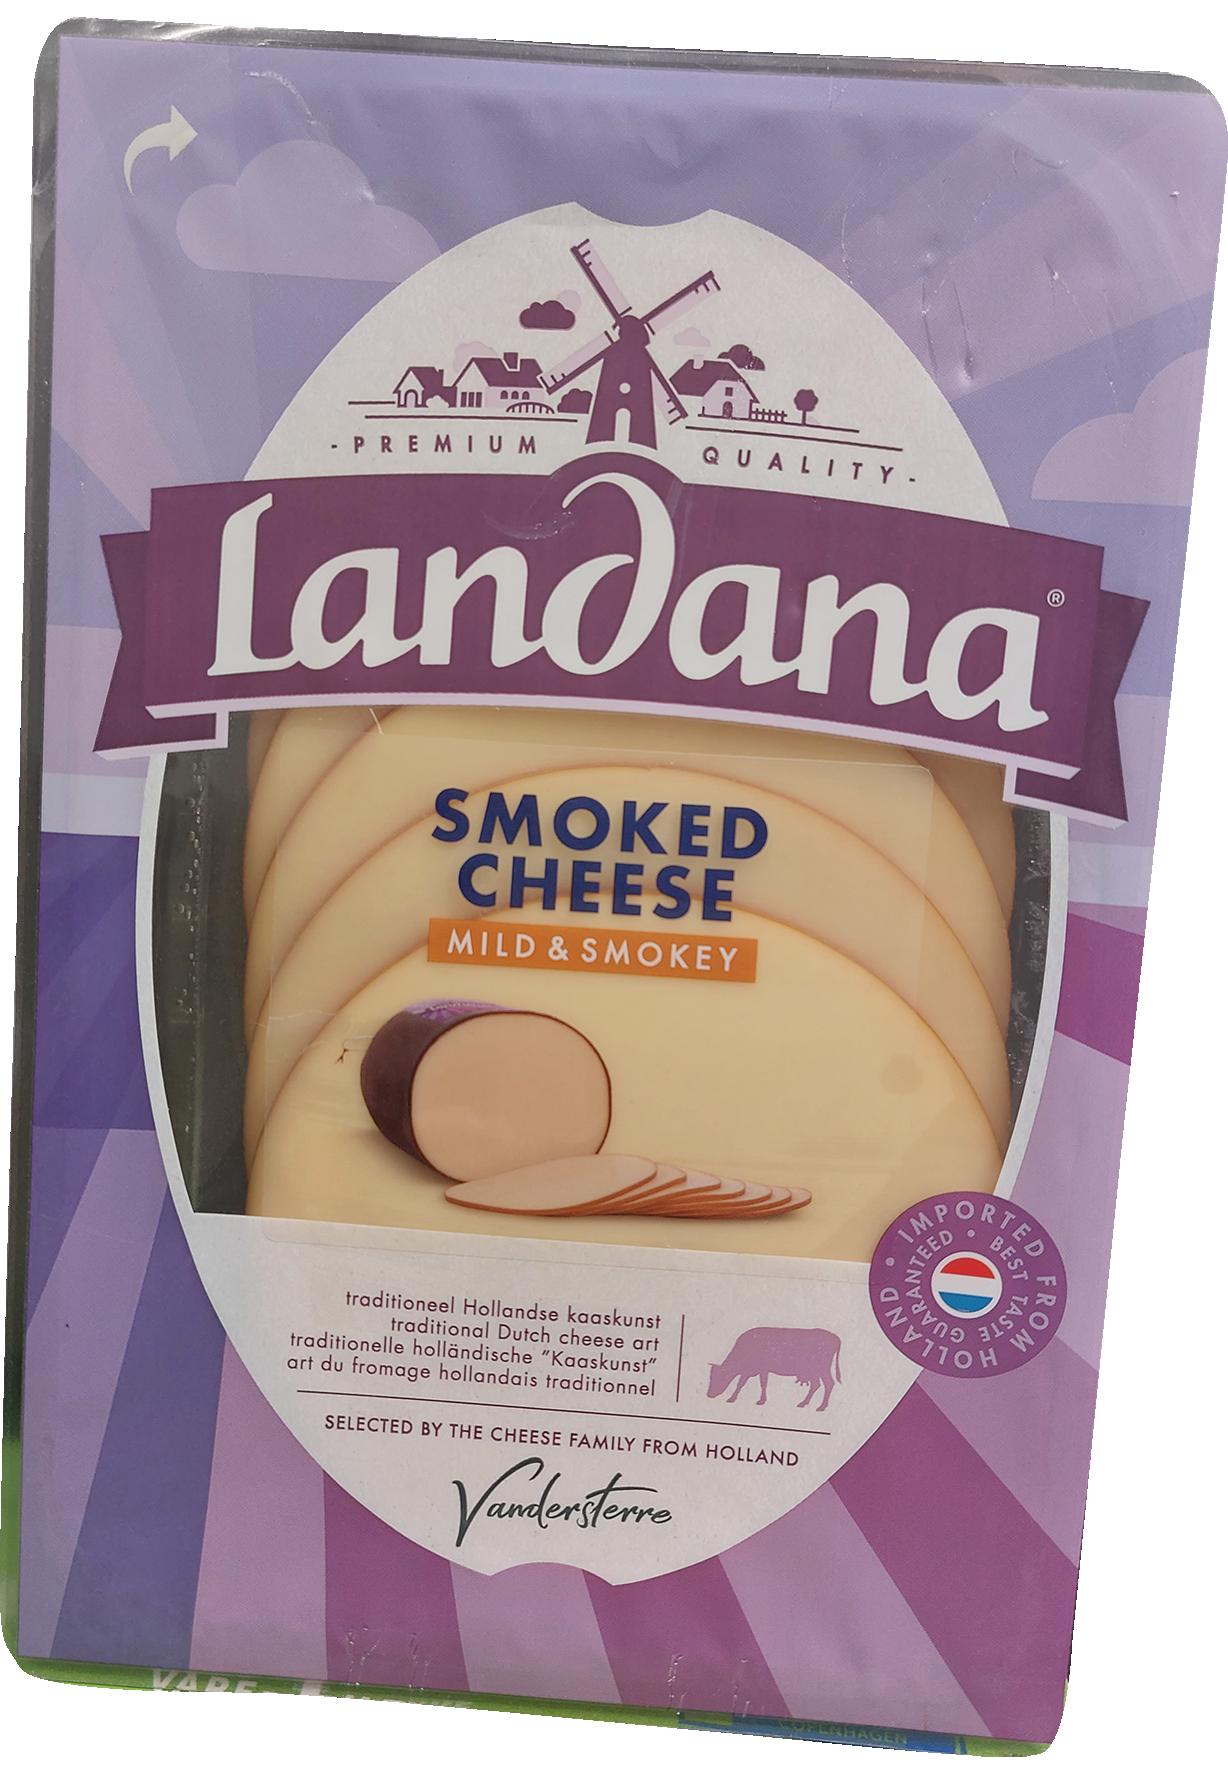 Slika za Sir smoked cheese Landana 150g